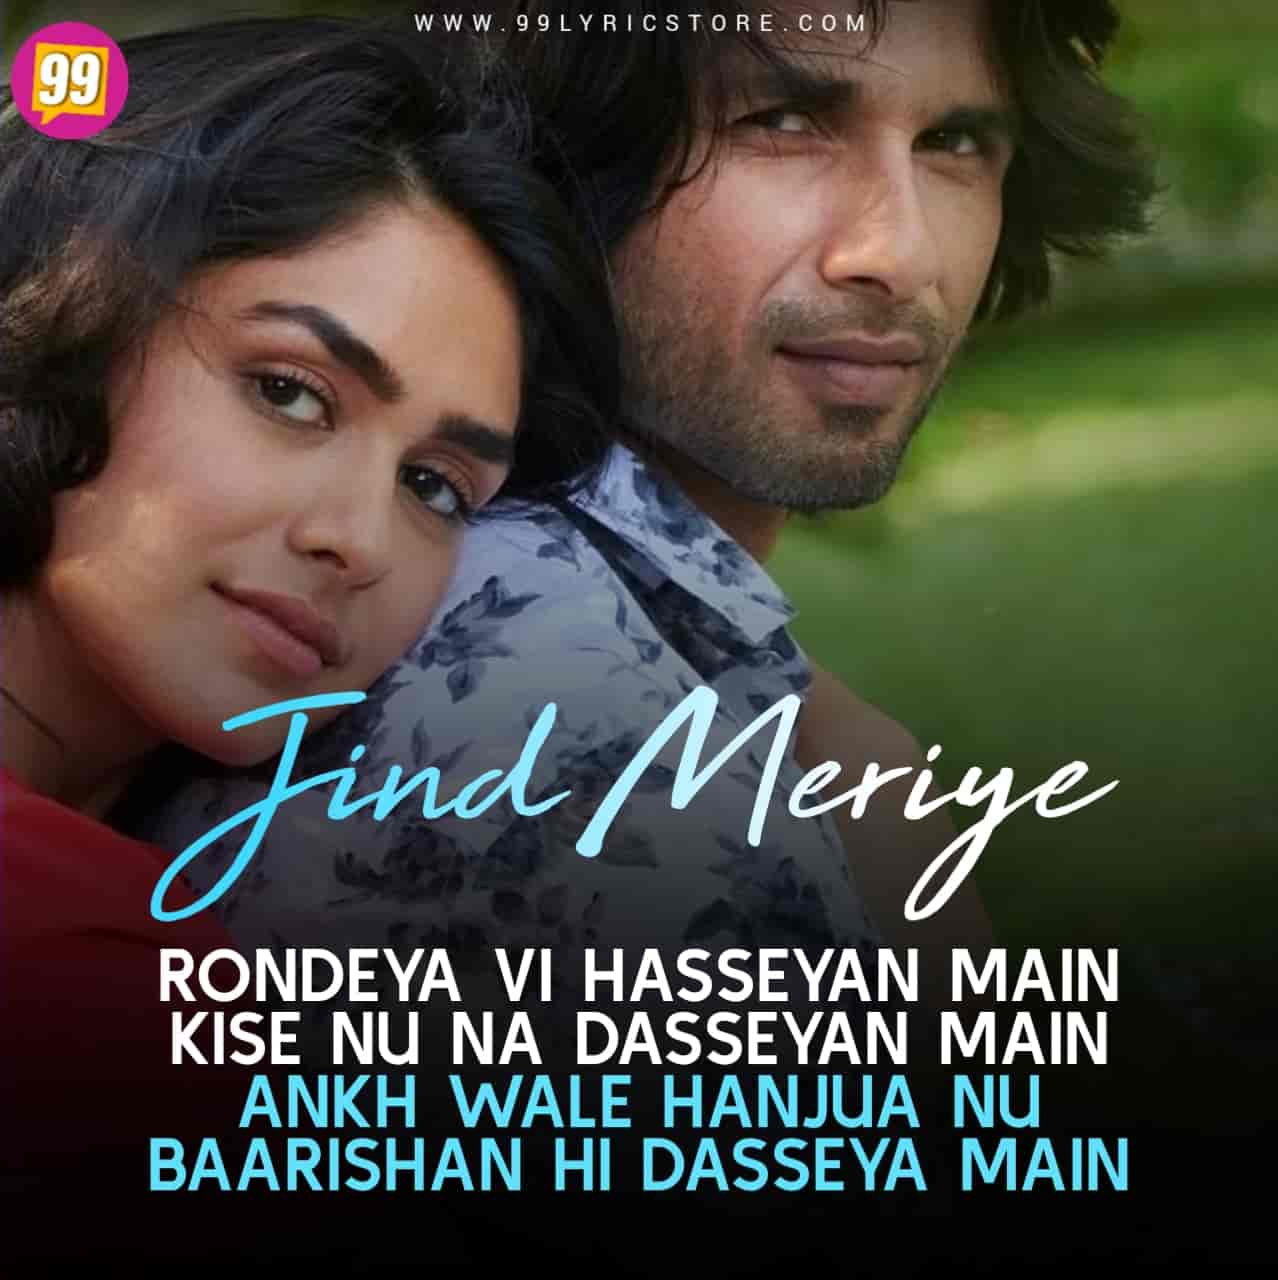 Jind Meriye Song Image From Movie Jersey Features Shahid Kapoor and Mrunal Thakur